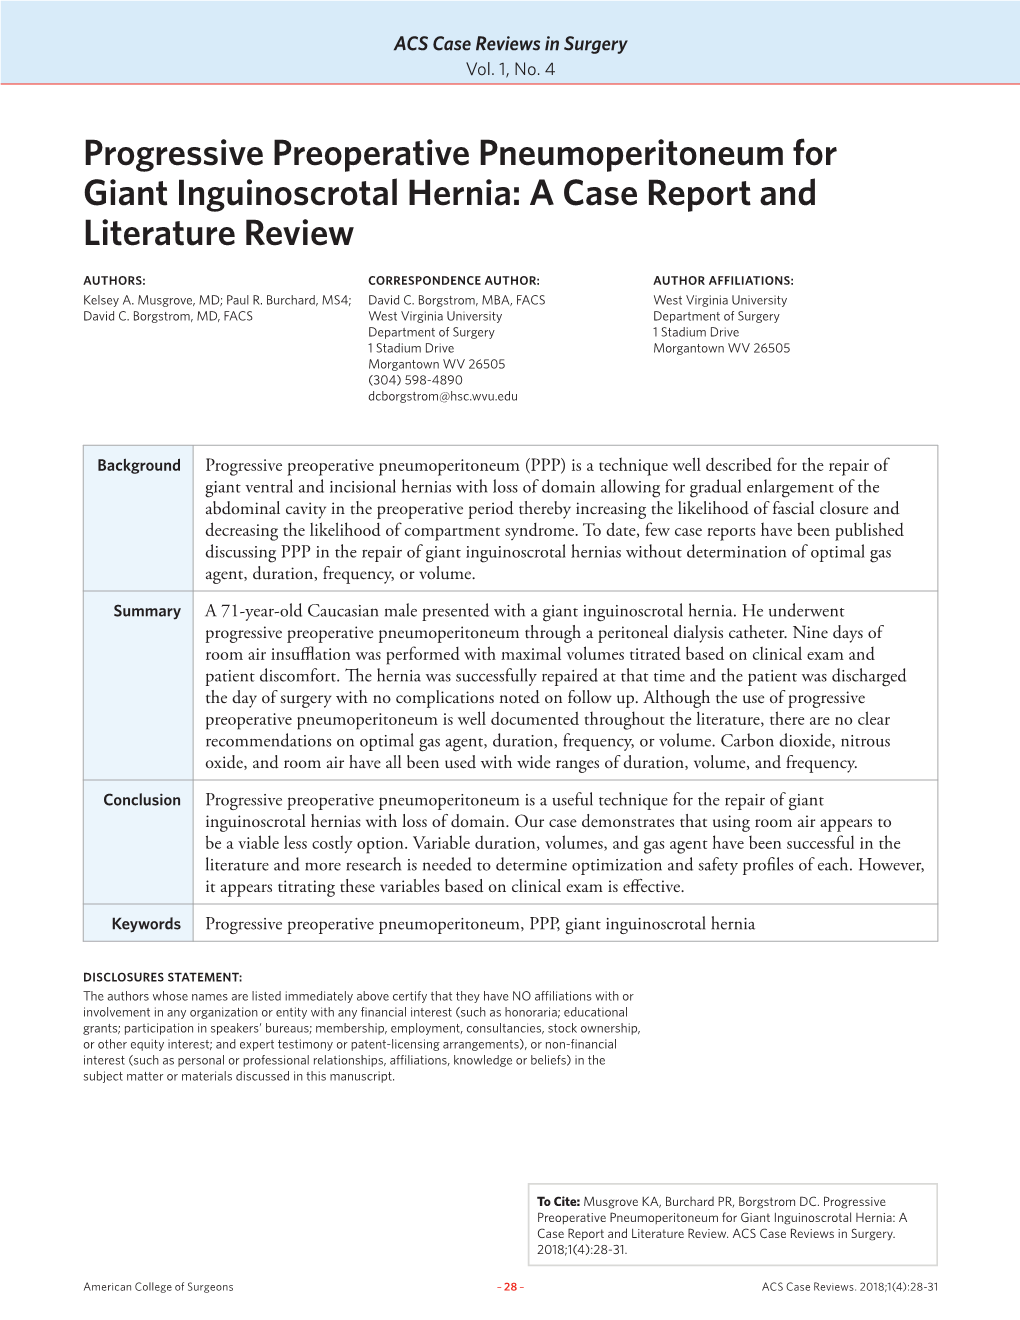 Progressive Preoperative Pneumoperitoneum for Giant Inguinoscrotal Hernia: a Case Report and Literature Review